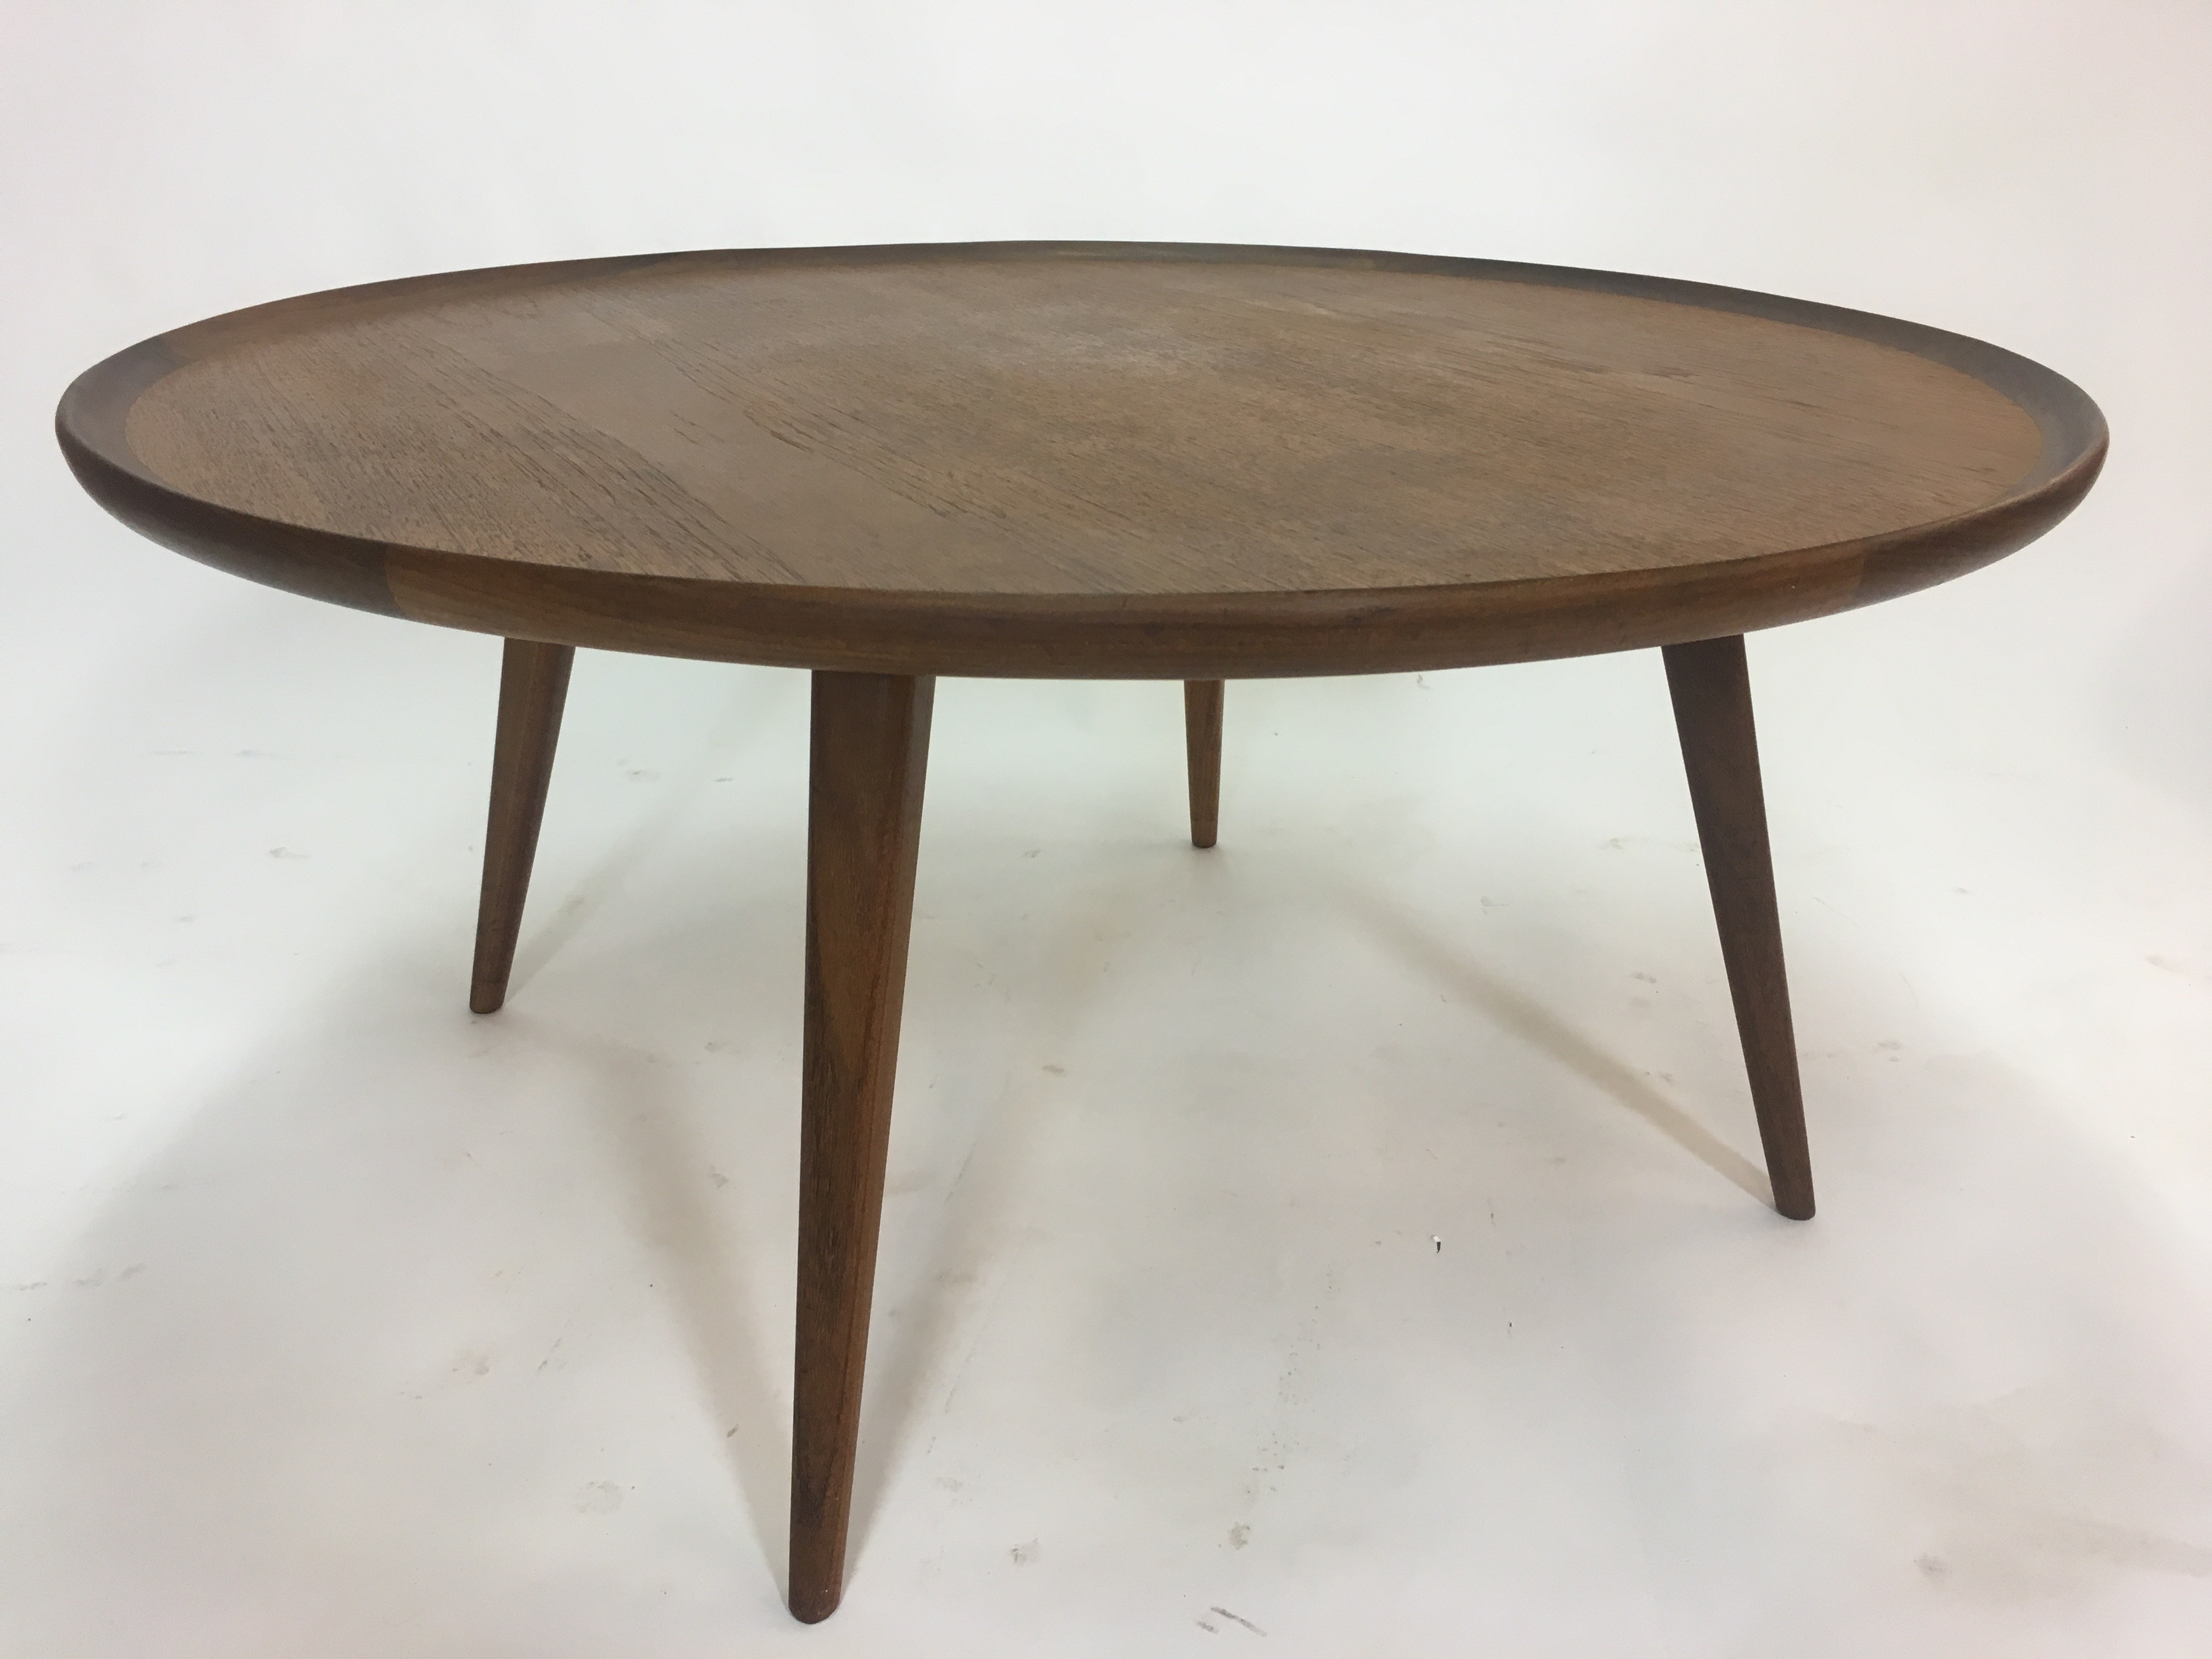 Vintage Round Teak Coffee Table - 1950s - Design Market